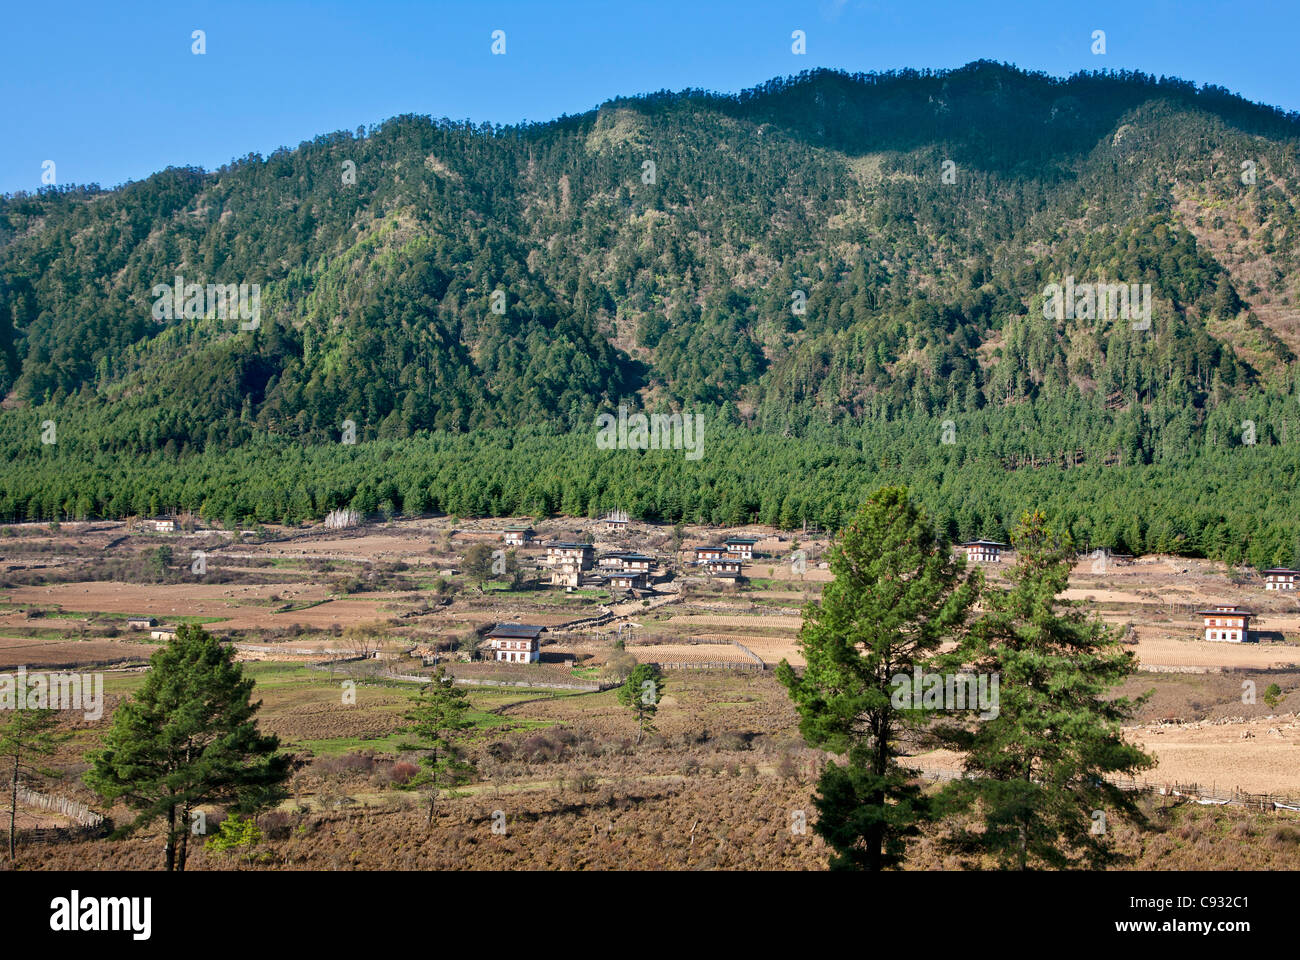 Farms in the fertile Phobjikha Valley. Stock Photo